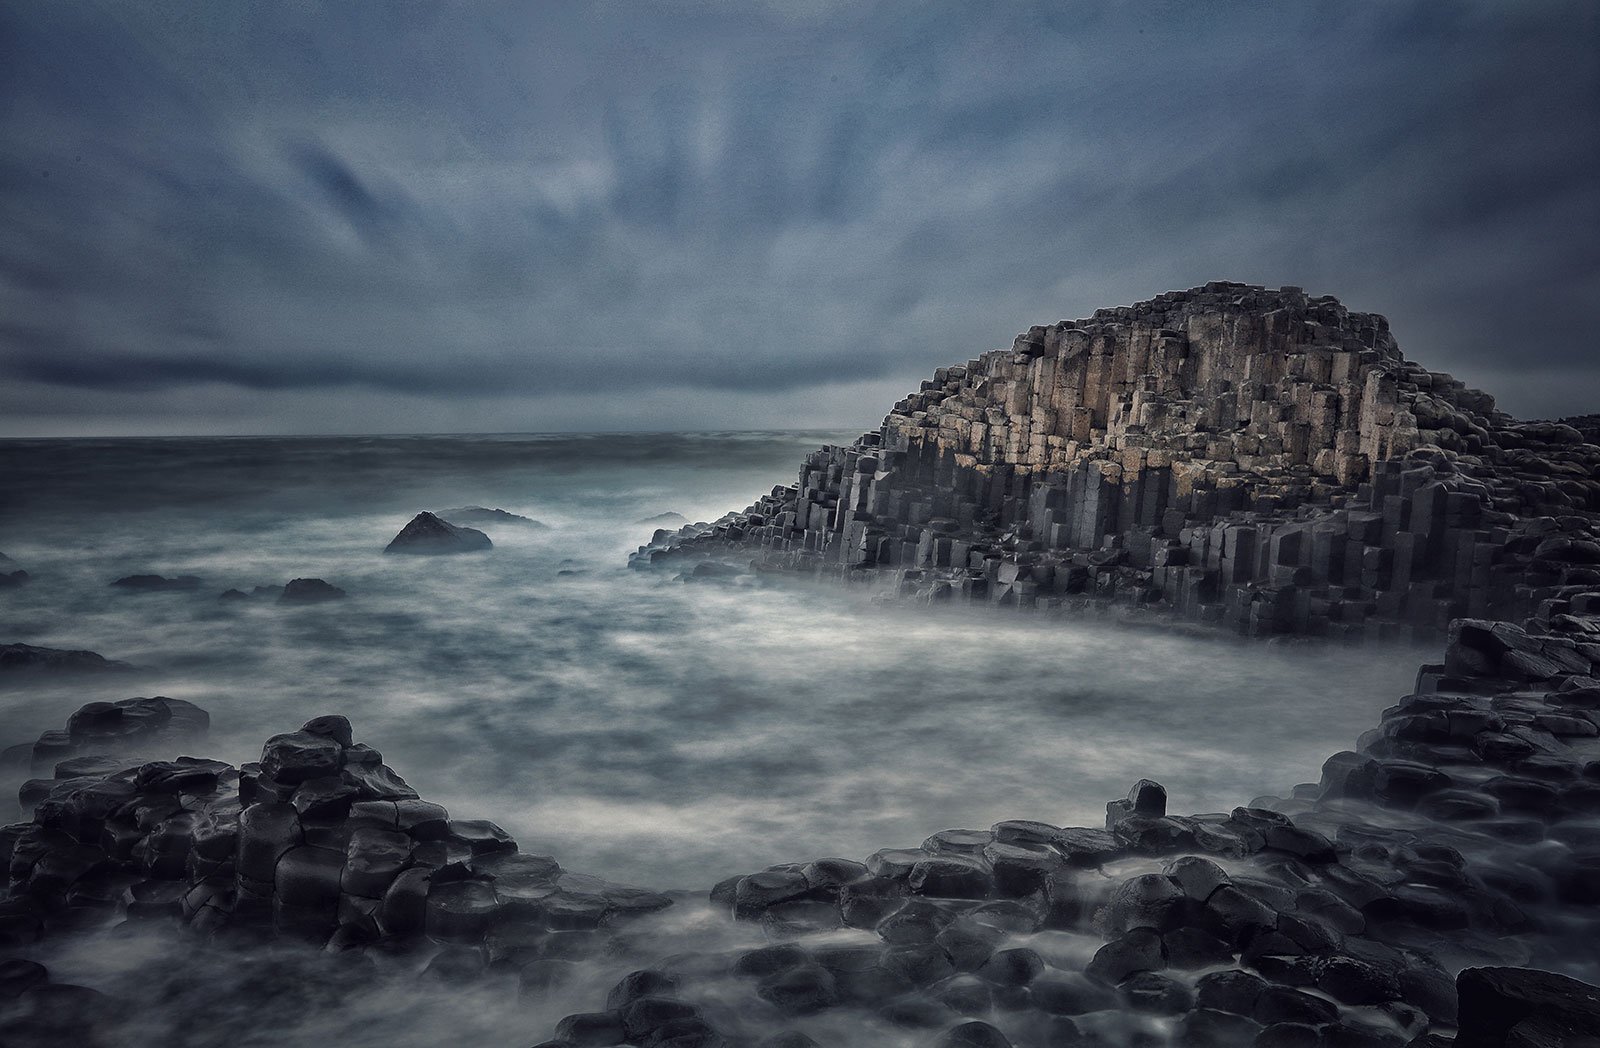 grey, blue and white waves crashing on rock towards a large stone like structure